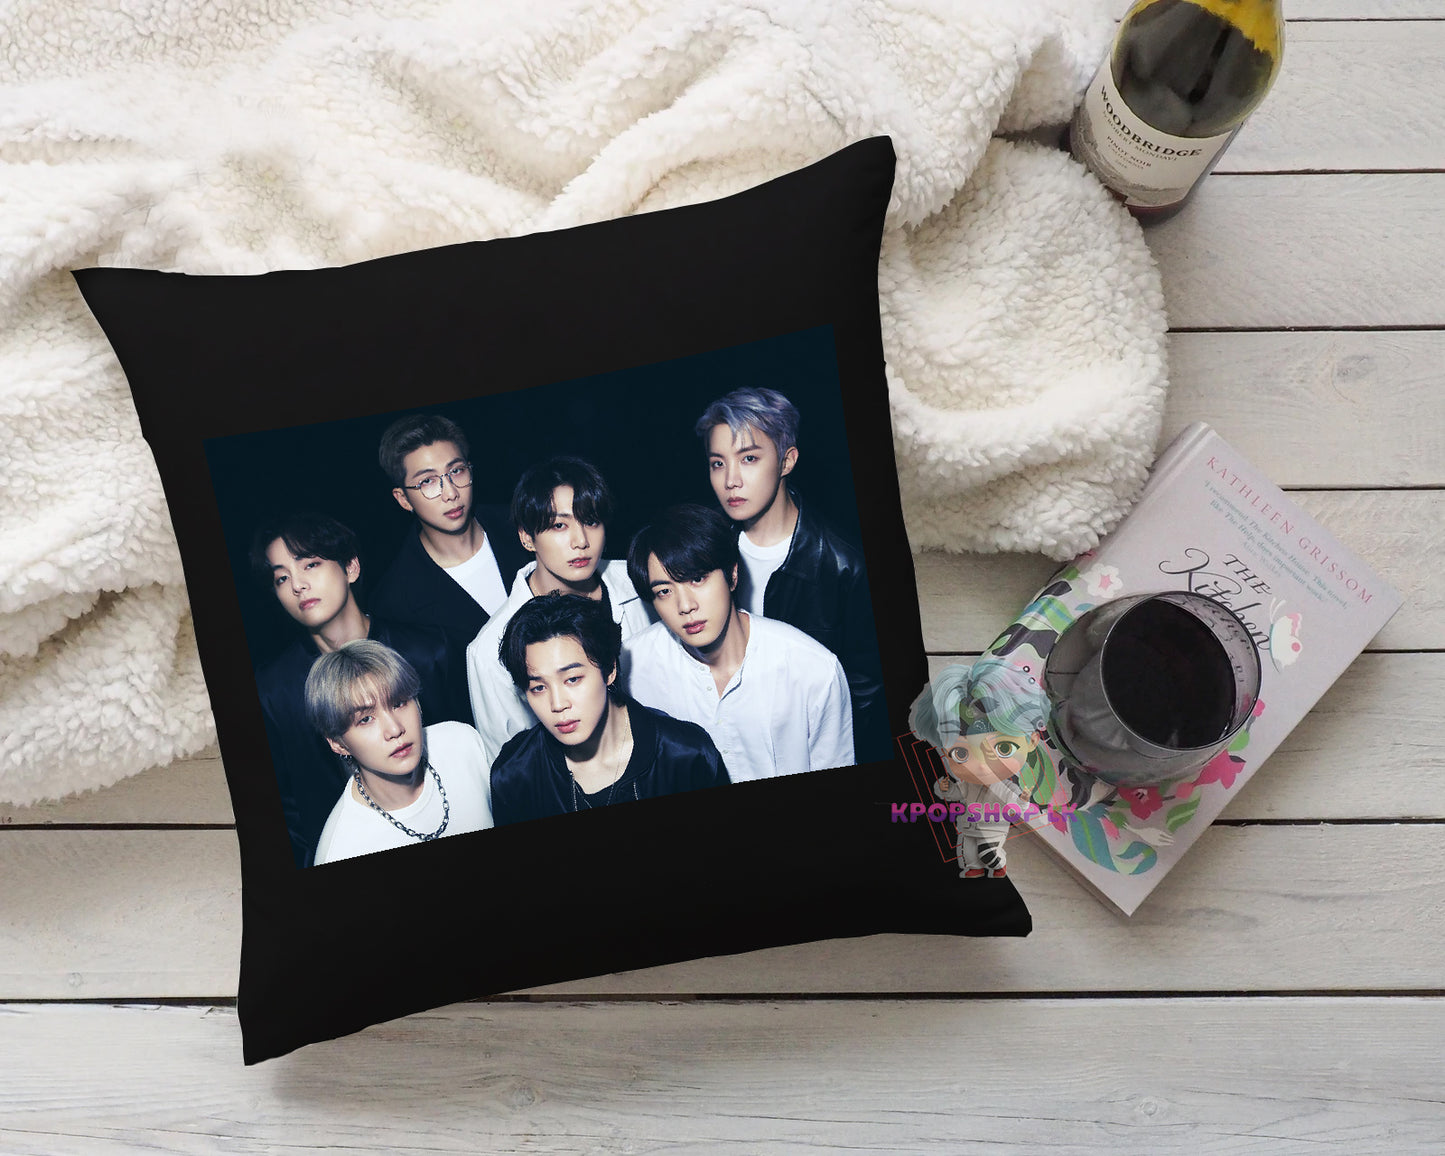 BTS Sofa Cushion Pillow Plush KPOP